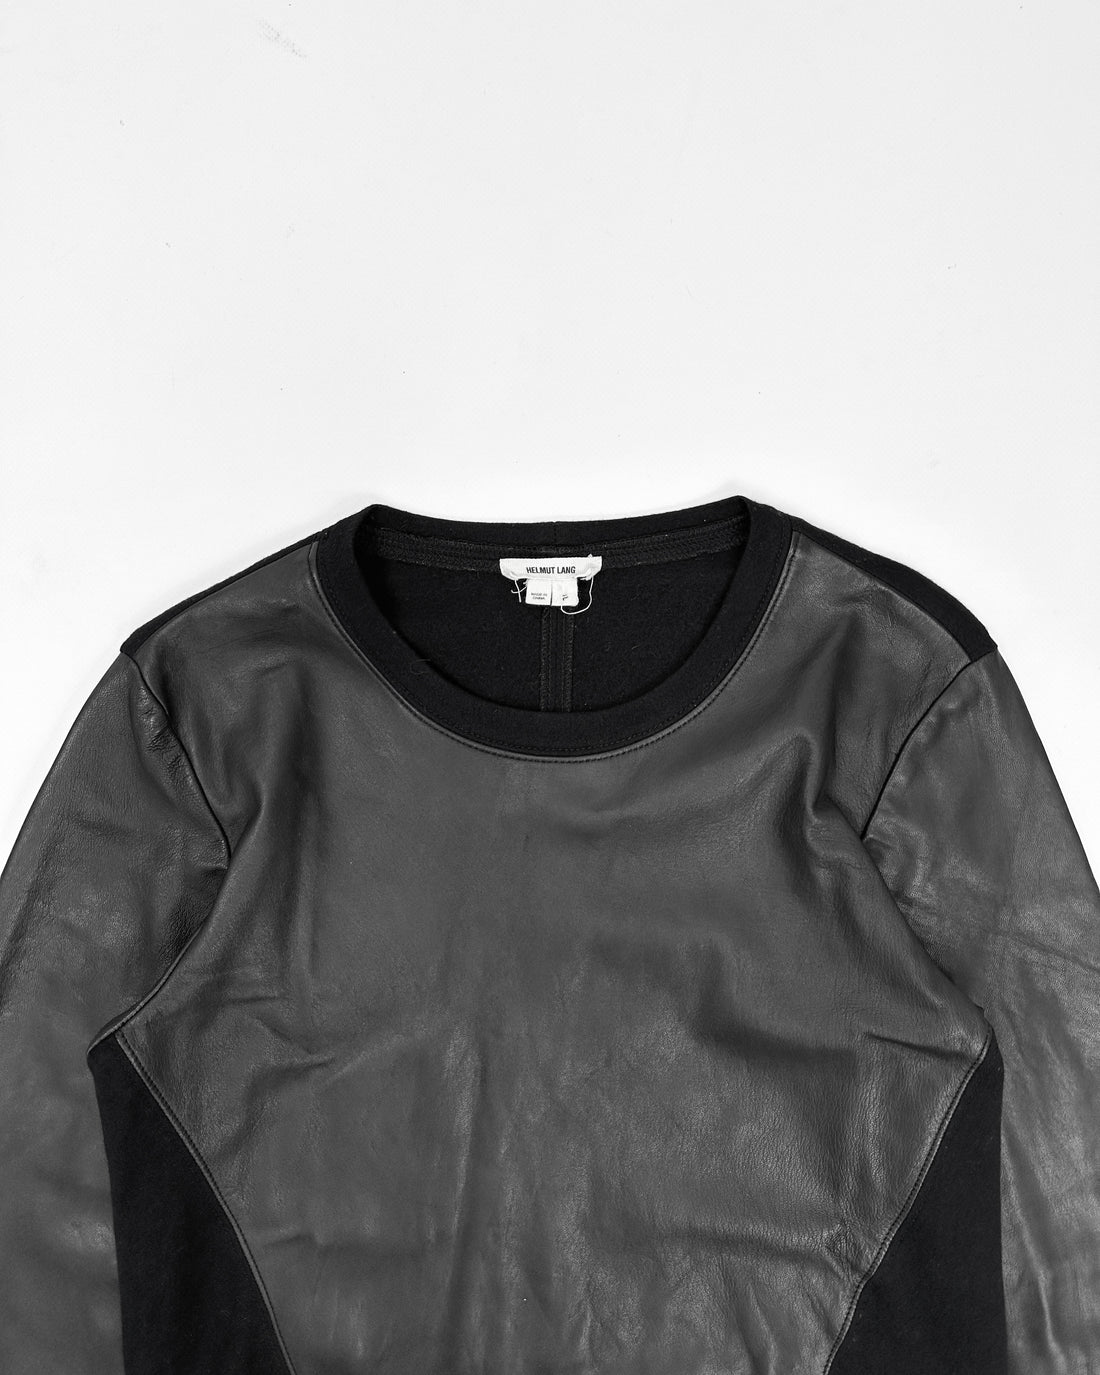 Helmut Lang Leather + Wool Black Crewneck 2000's